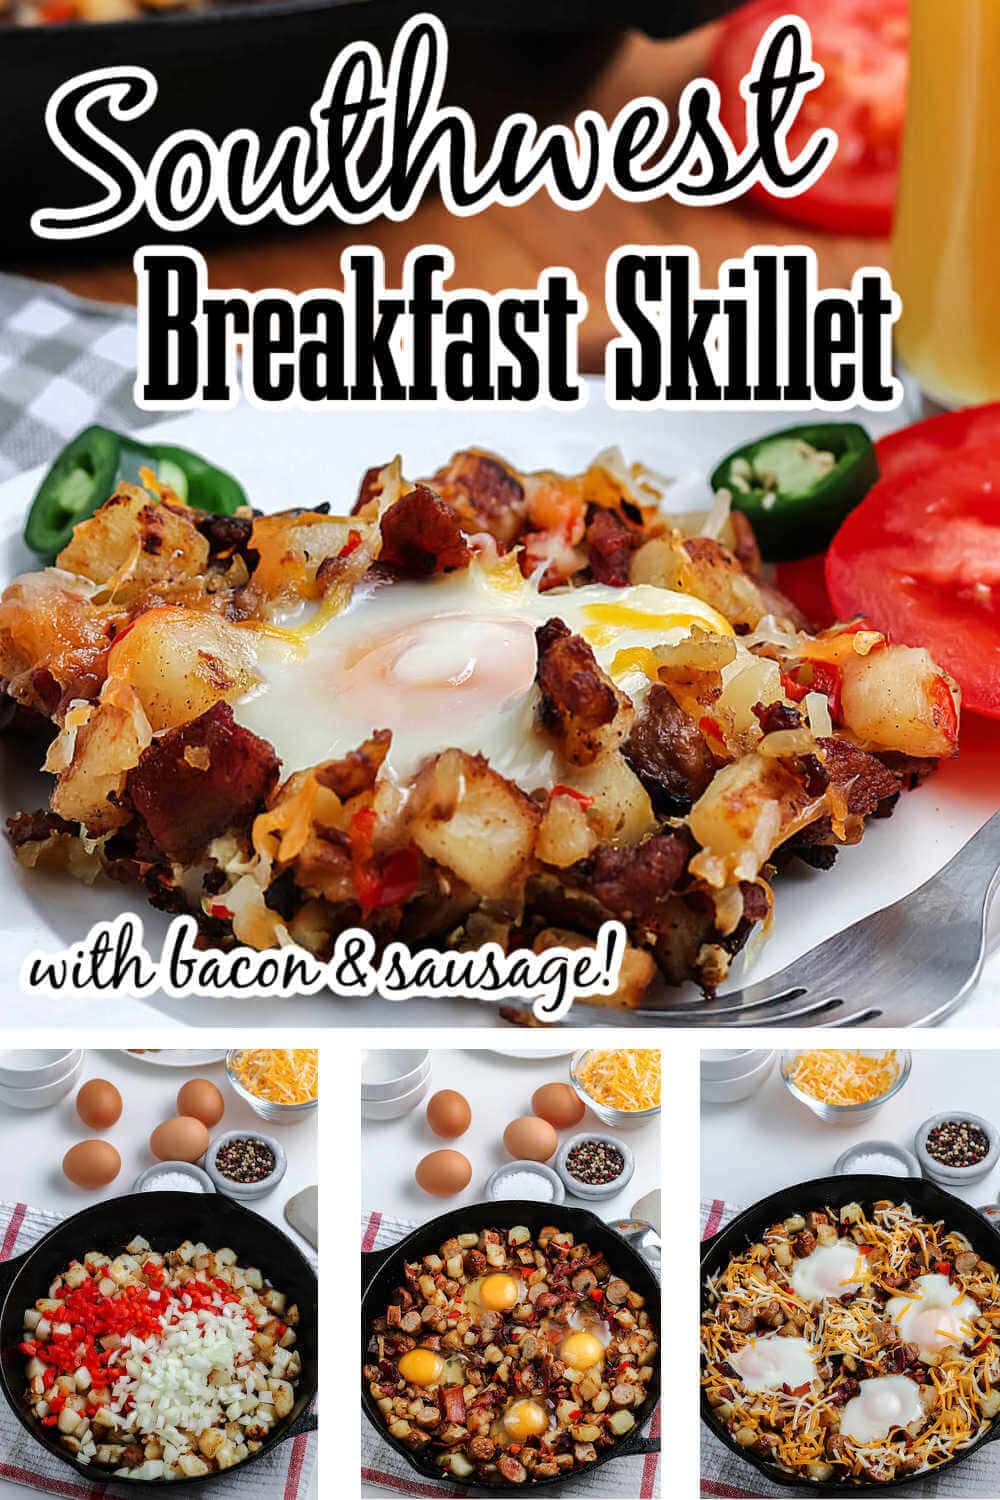 https://bowl-me-over.com/wp-content/uploads/2022/05/Southwest-Breakfast-Skillet.jpg